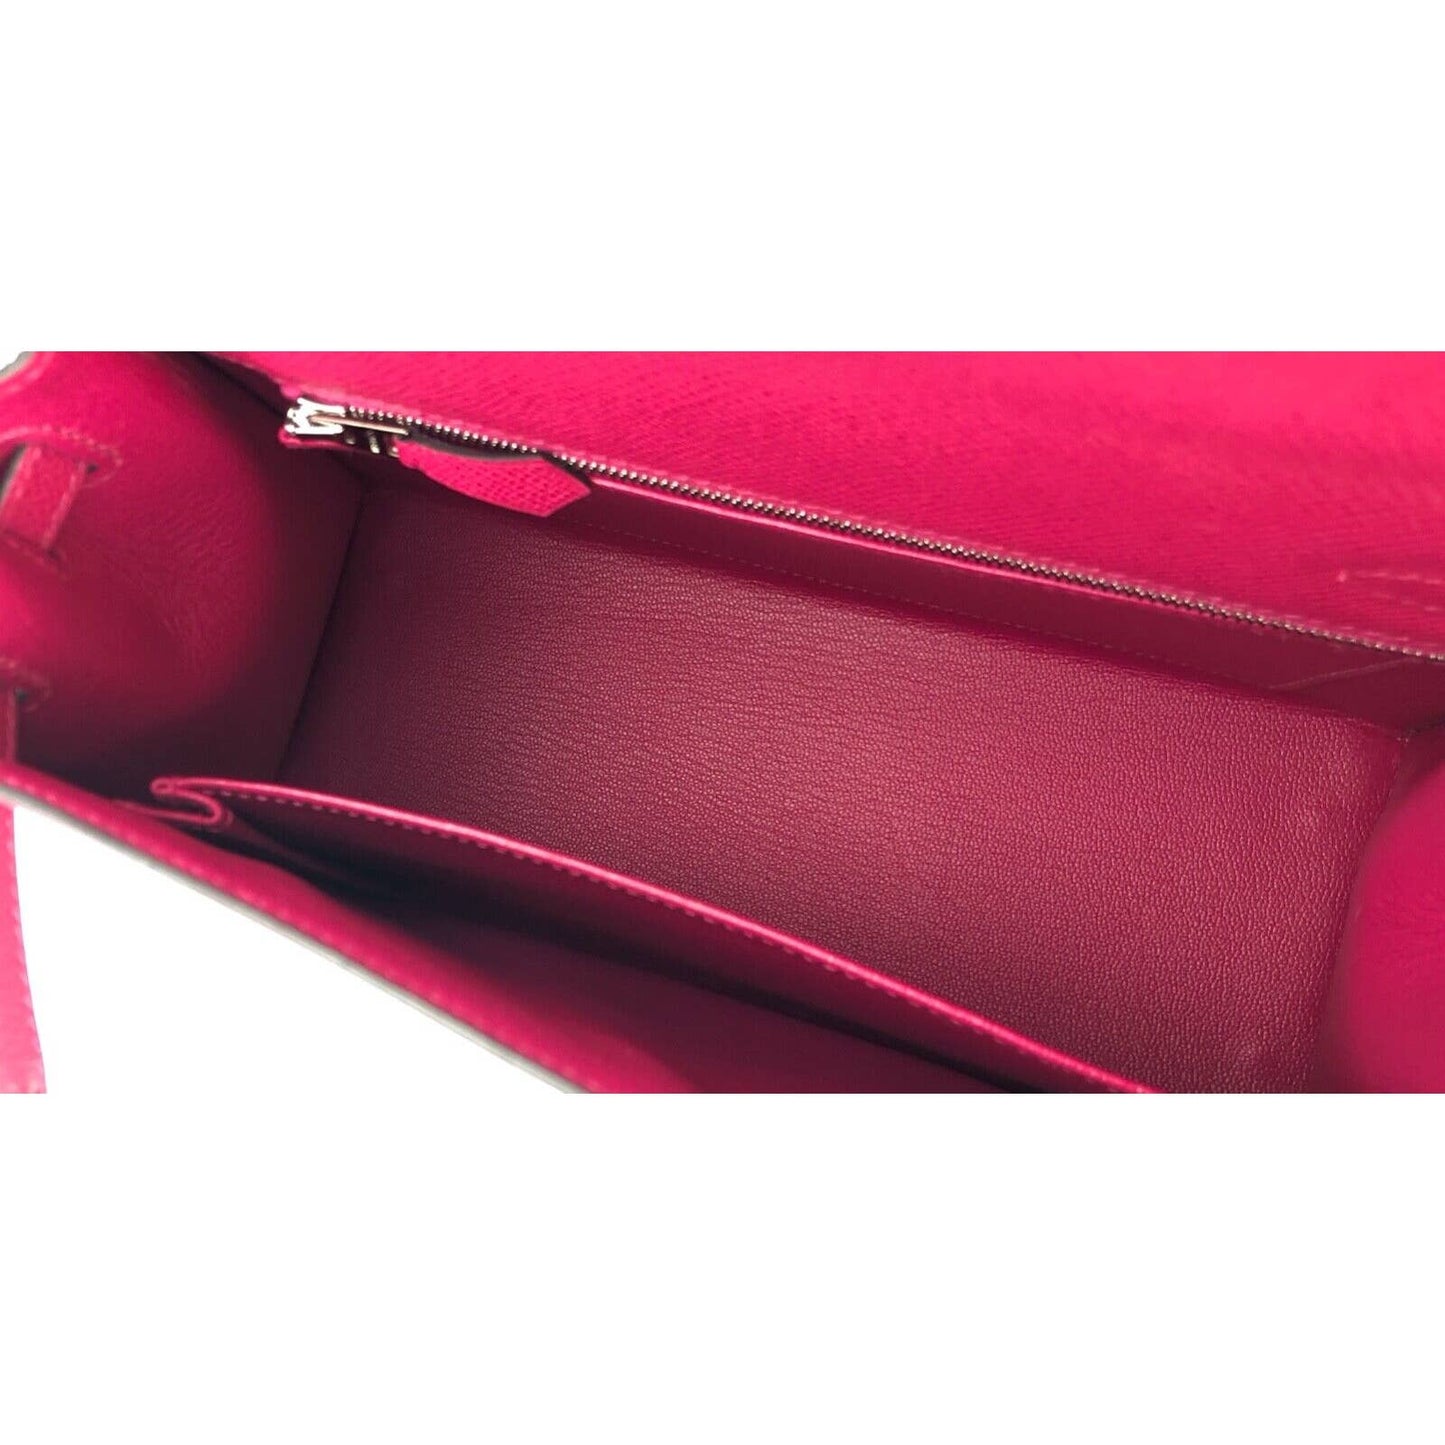 Hermes Kelly 28 Sellier Rose Tyrien Pink Epsom Leather Palladium